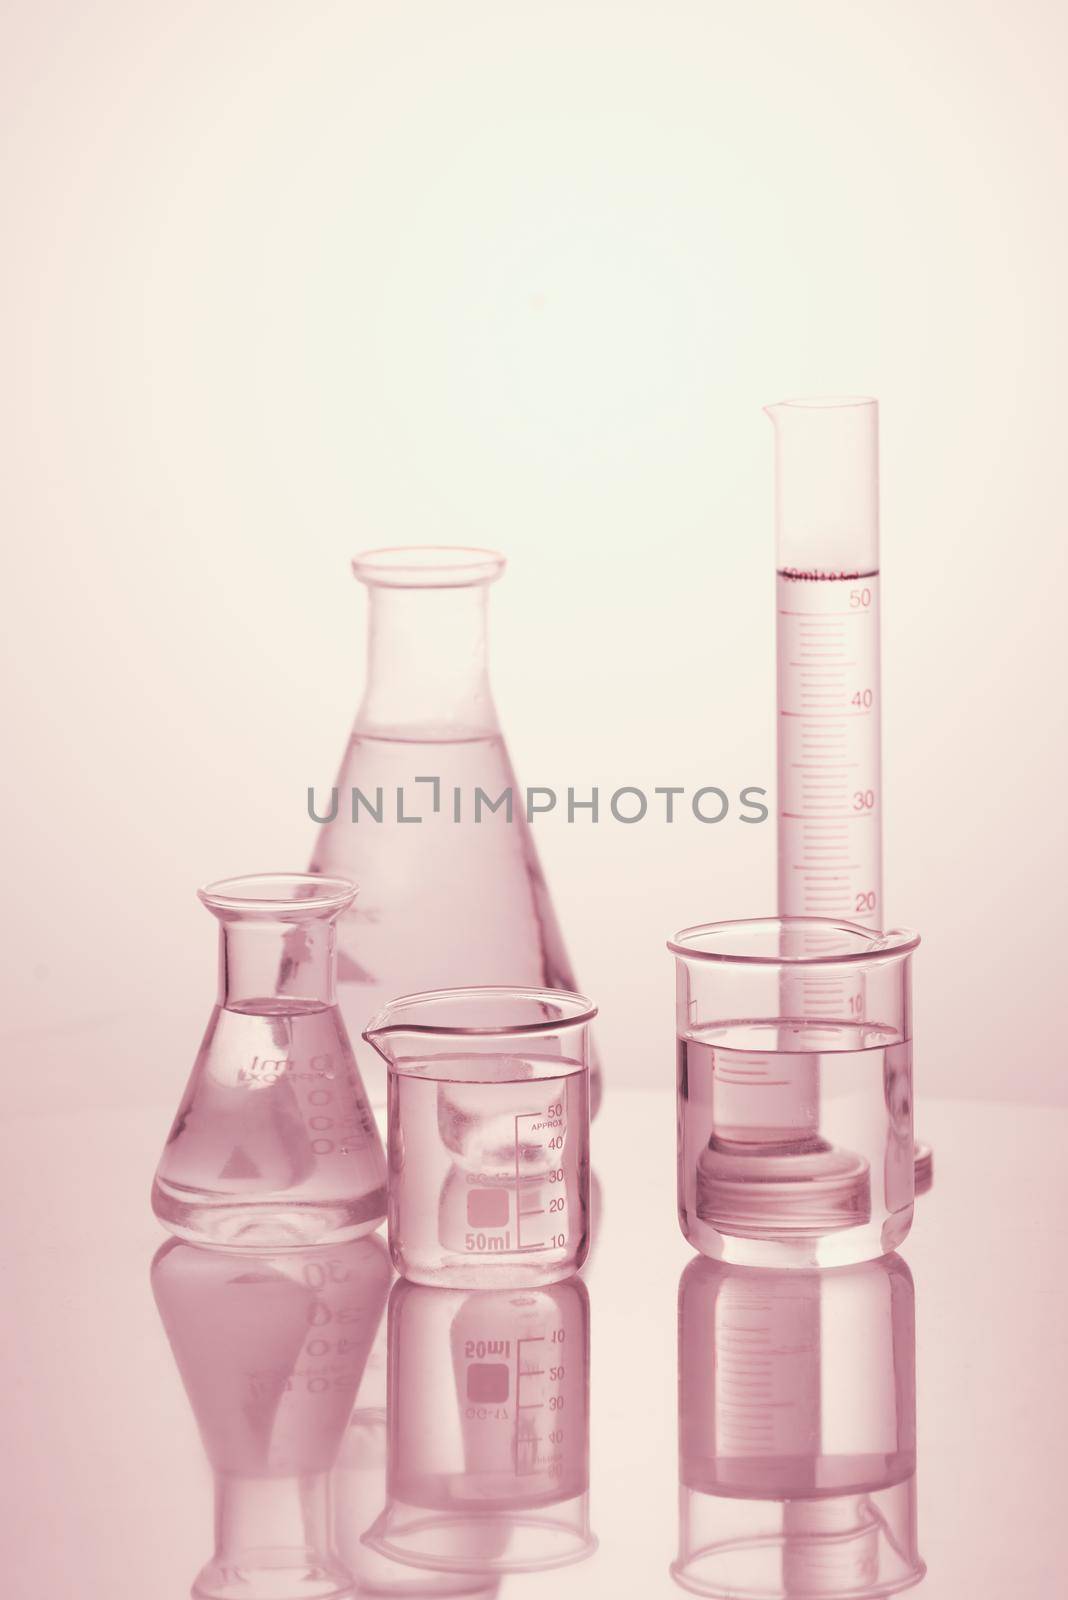 Assorted laboratory glassware equipment - Image by makidotvn